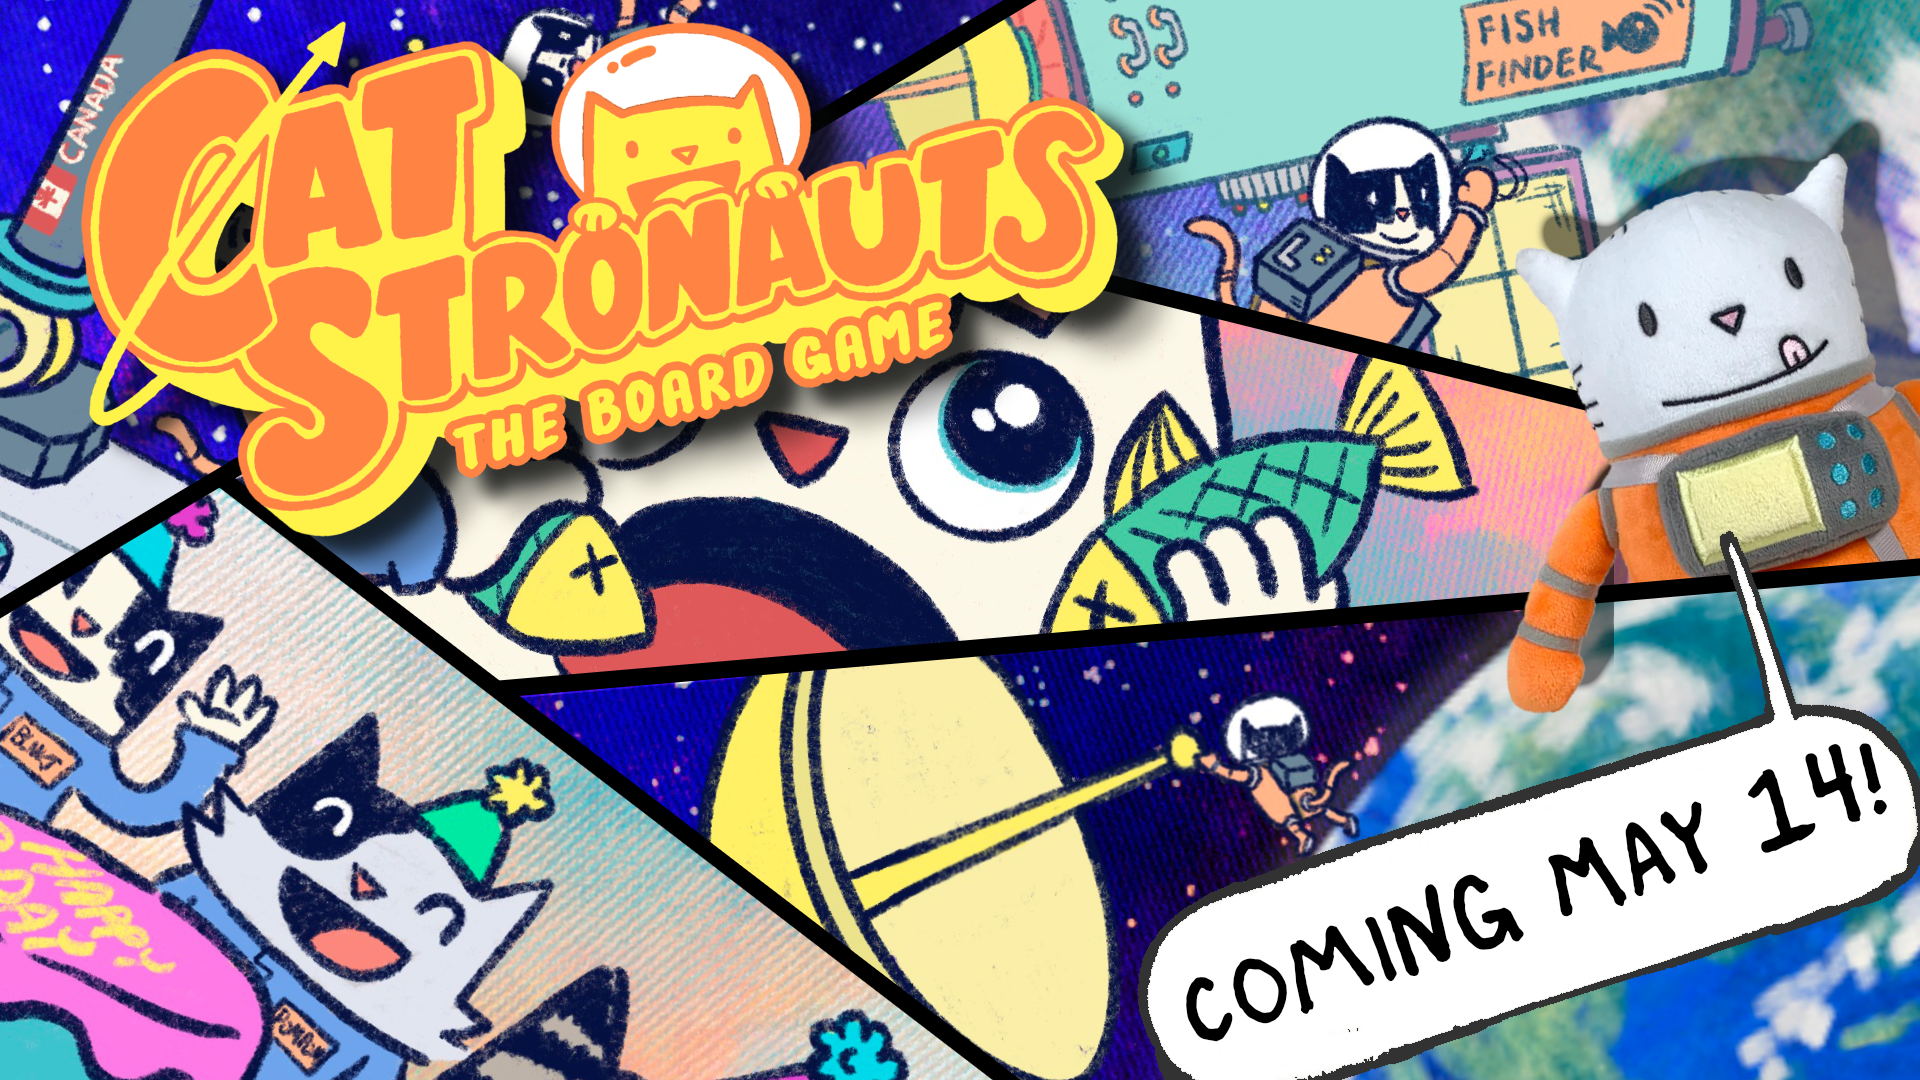 Prepare for Lunch! CatStronauts Kickstarter MAY 14!